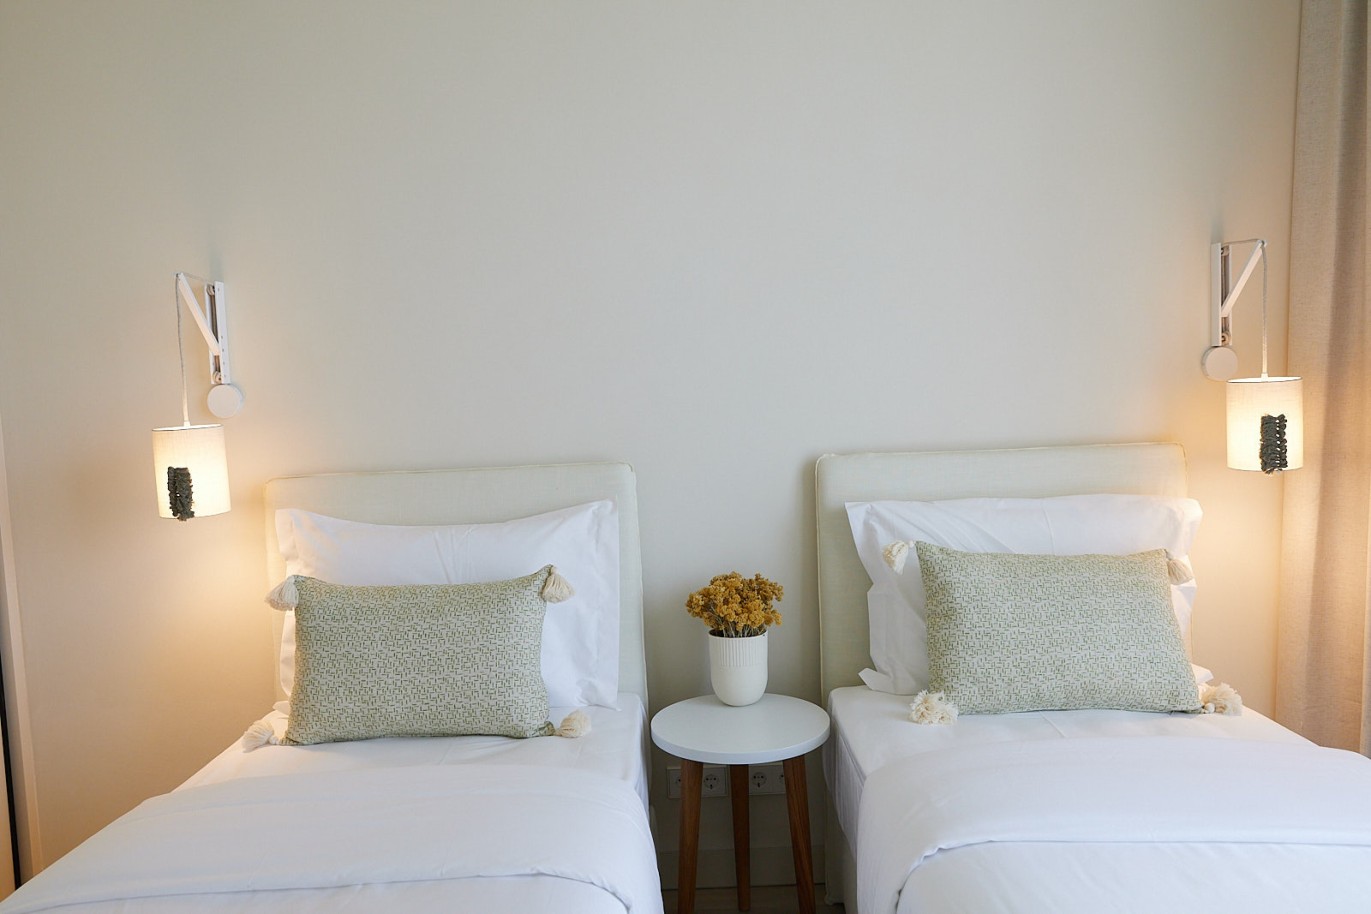 2 bedroom apartment in resort, for sale in Porches, Algarve_229084